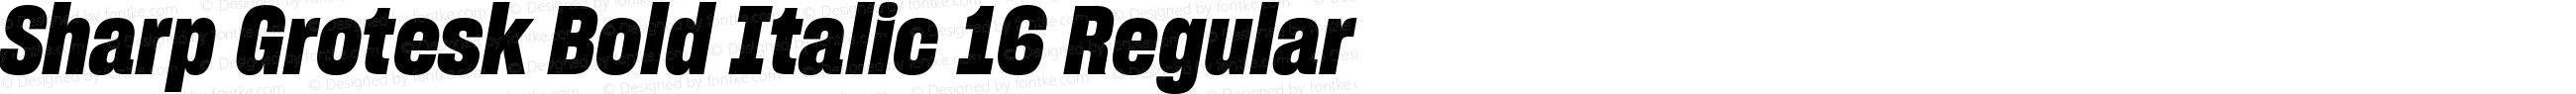 Sharp Grotesk Bold Italic 16 Regular